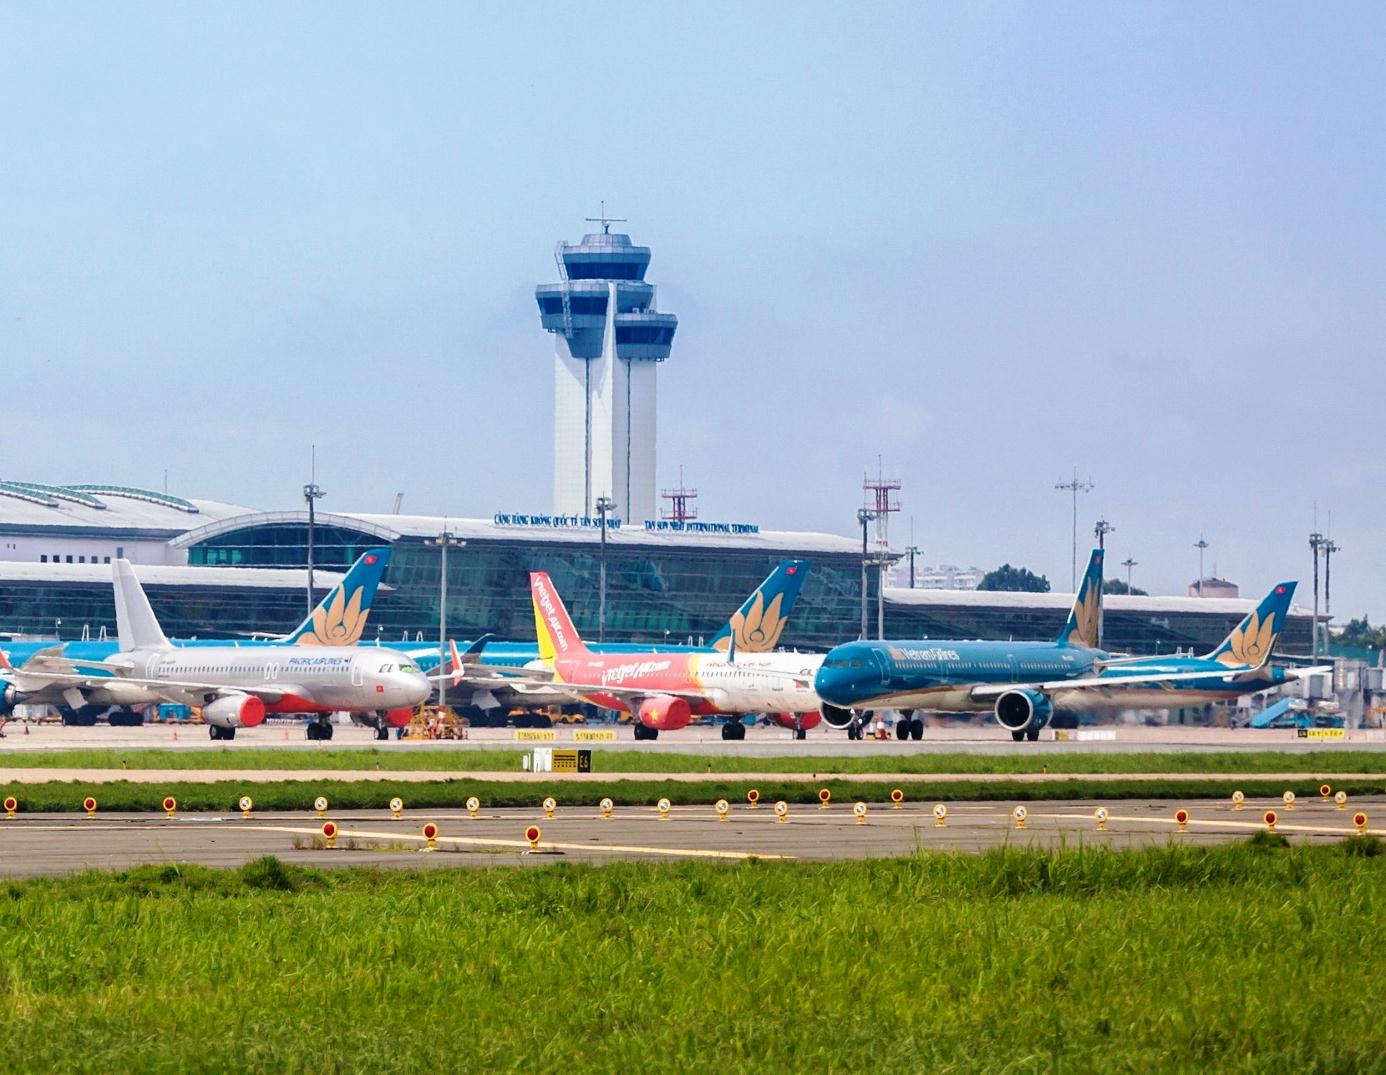 Vietnam airport